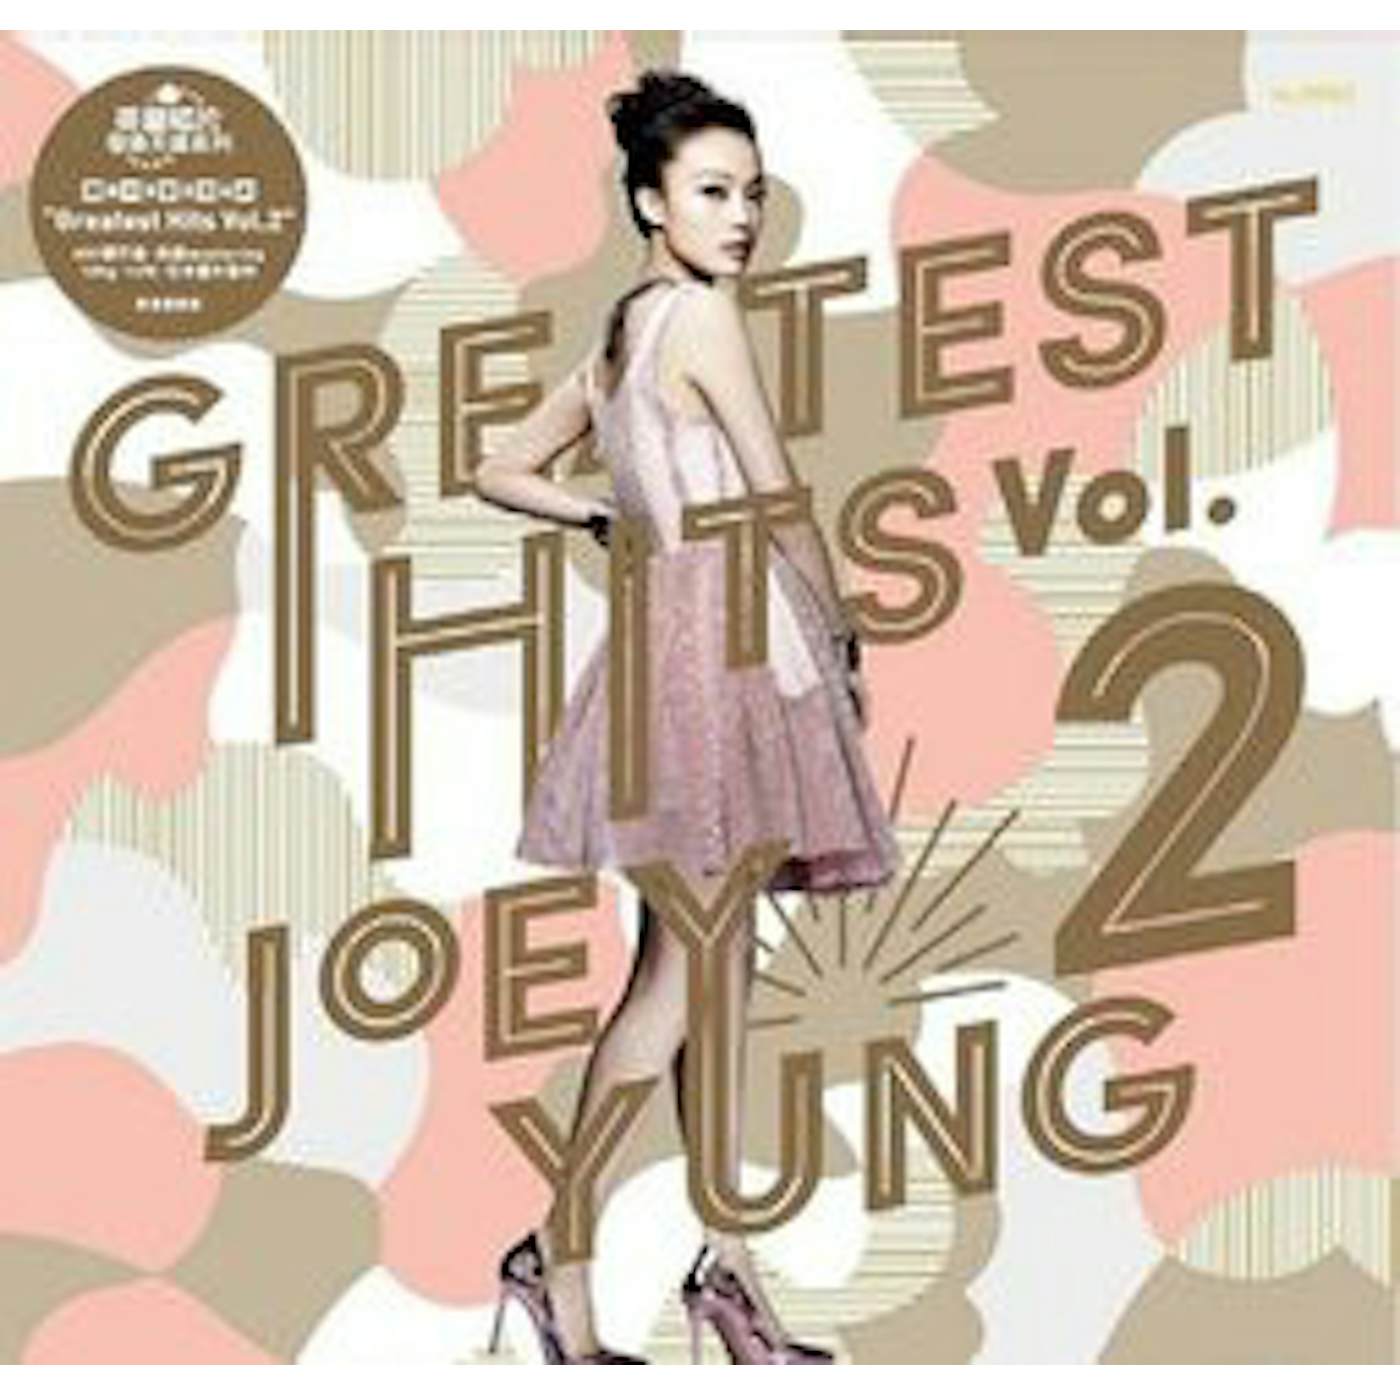 Yung Joey GREATEST HITS VOL 2 Vinyl Record